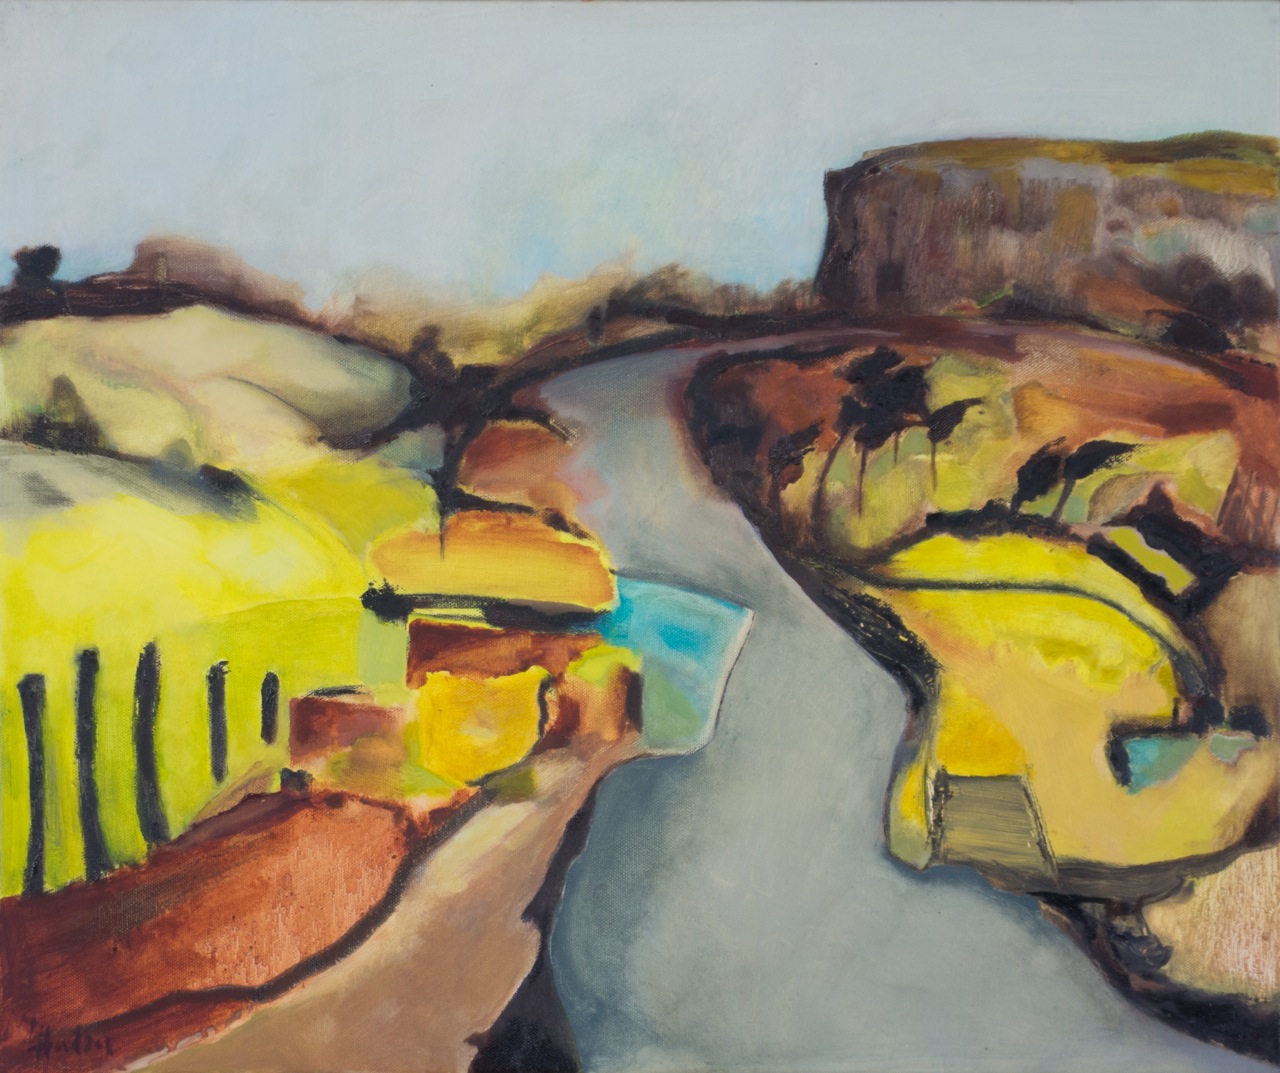 Coast Road, Widemouth Bay [55x46cm] oil on canvas  Laura Hudson 2013